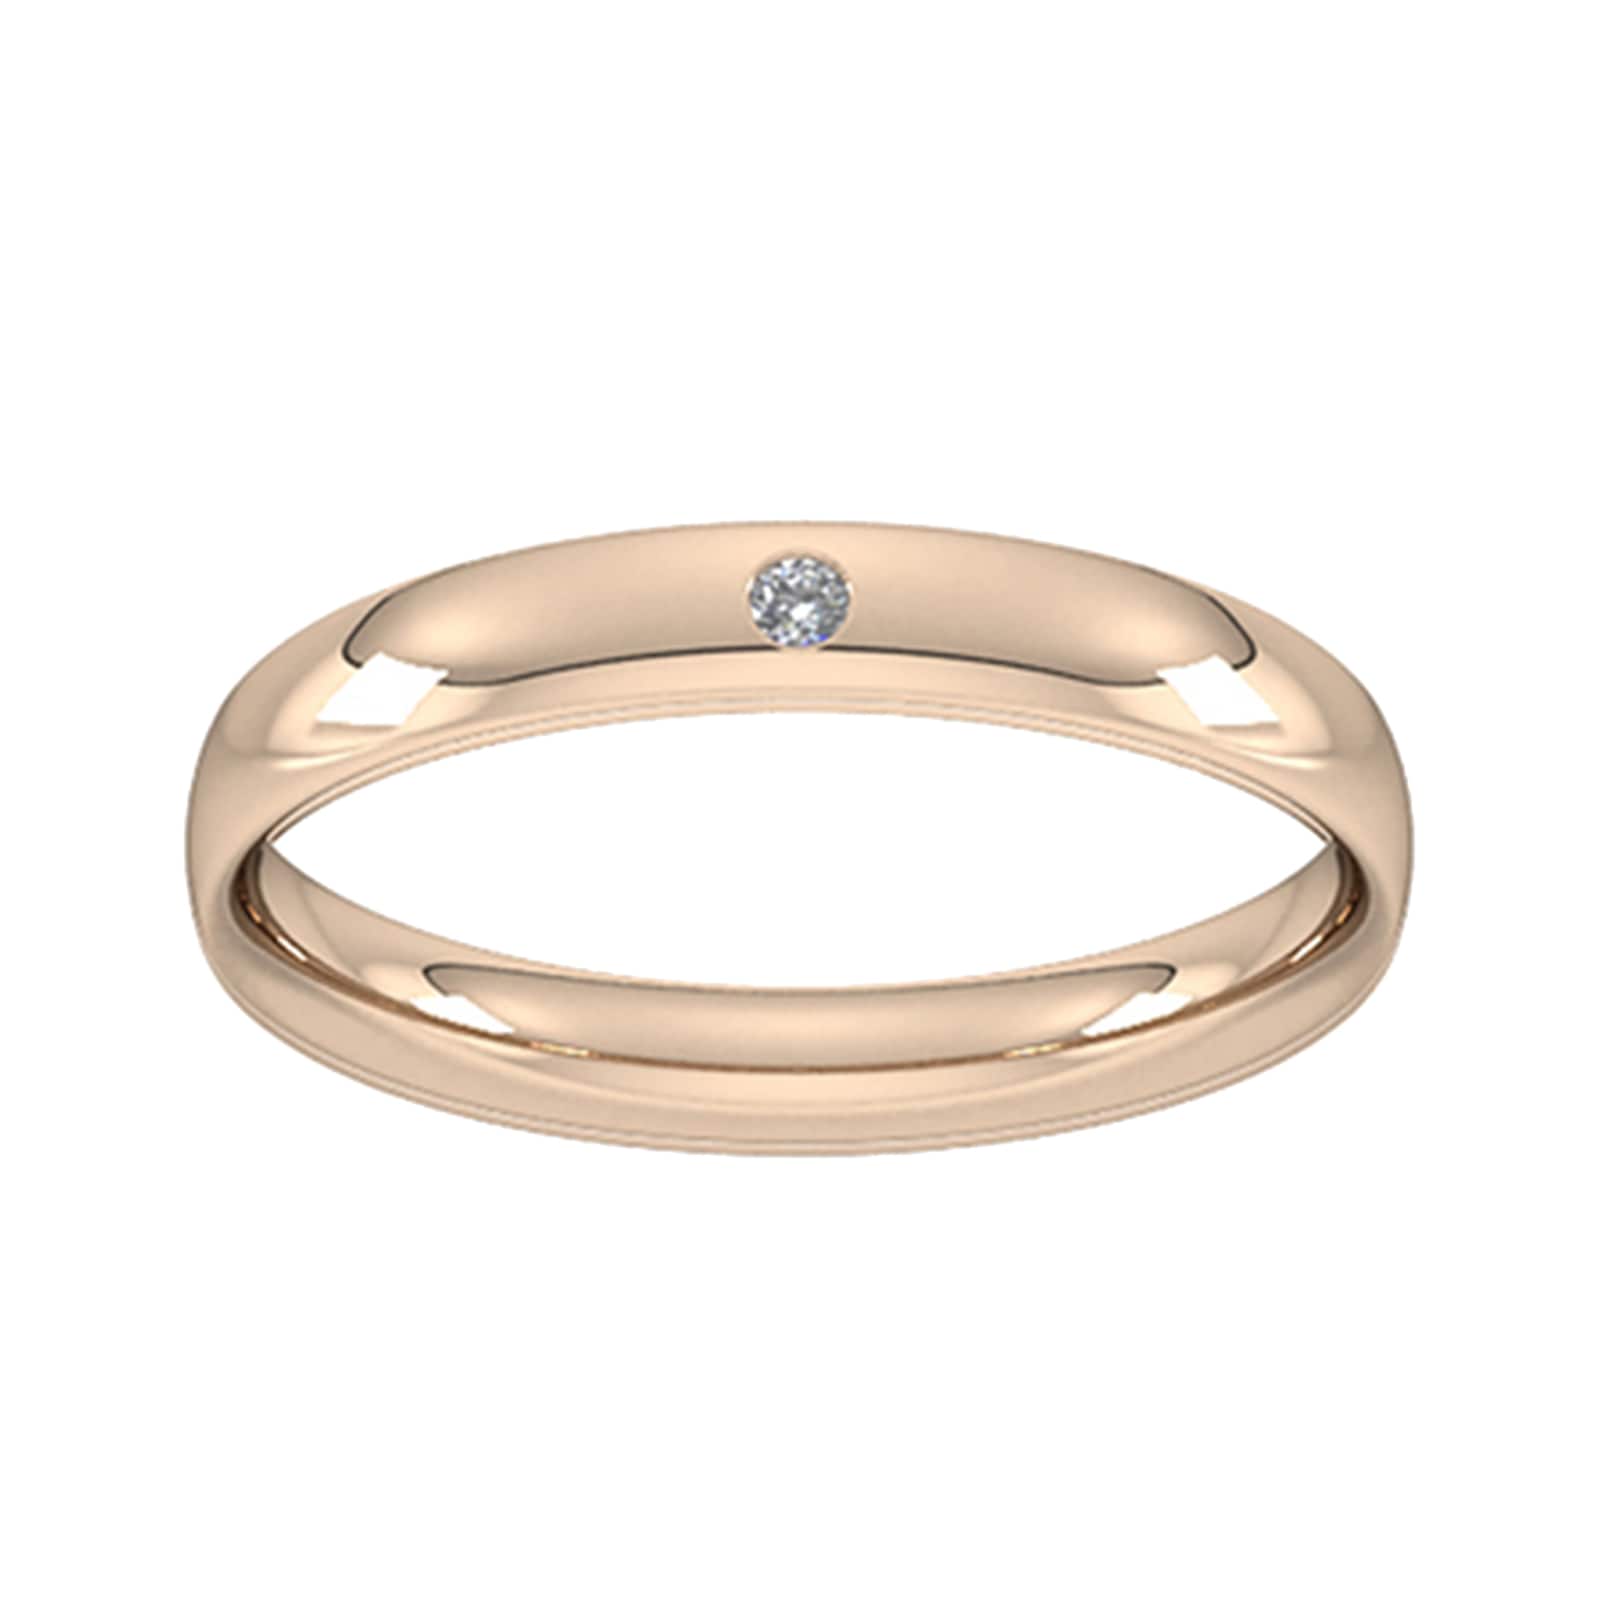 3mm Brilliant Cut Rub Over Diamond Set Wedding Ring In 18 Carat Rose Gold - Ring Size S